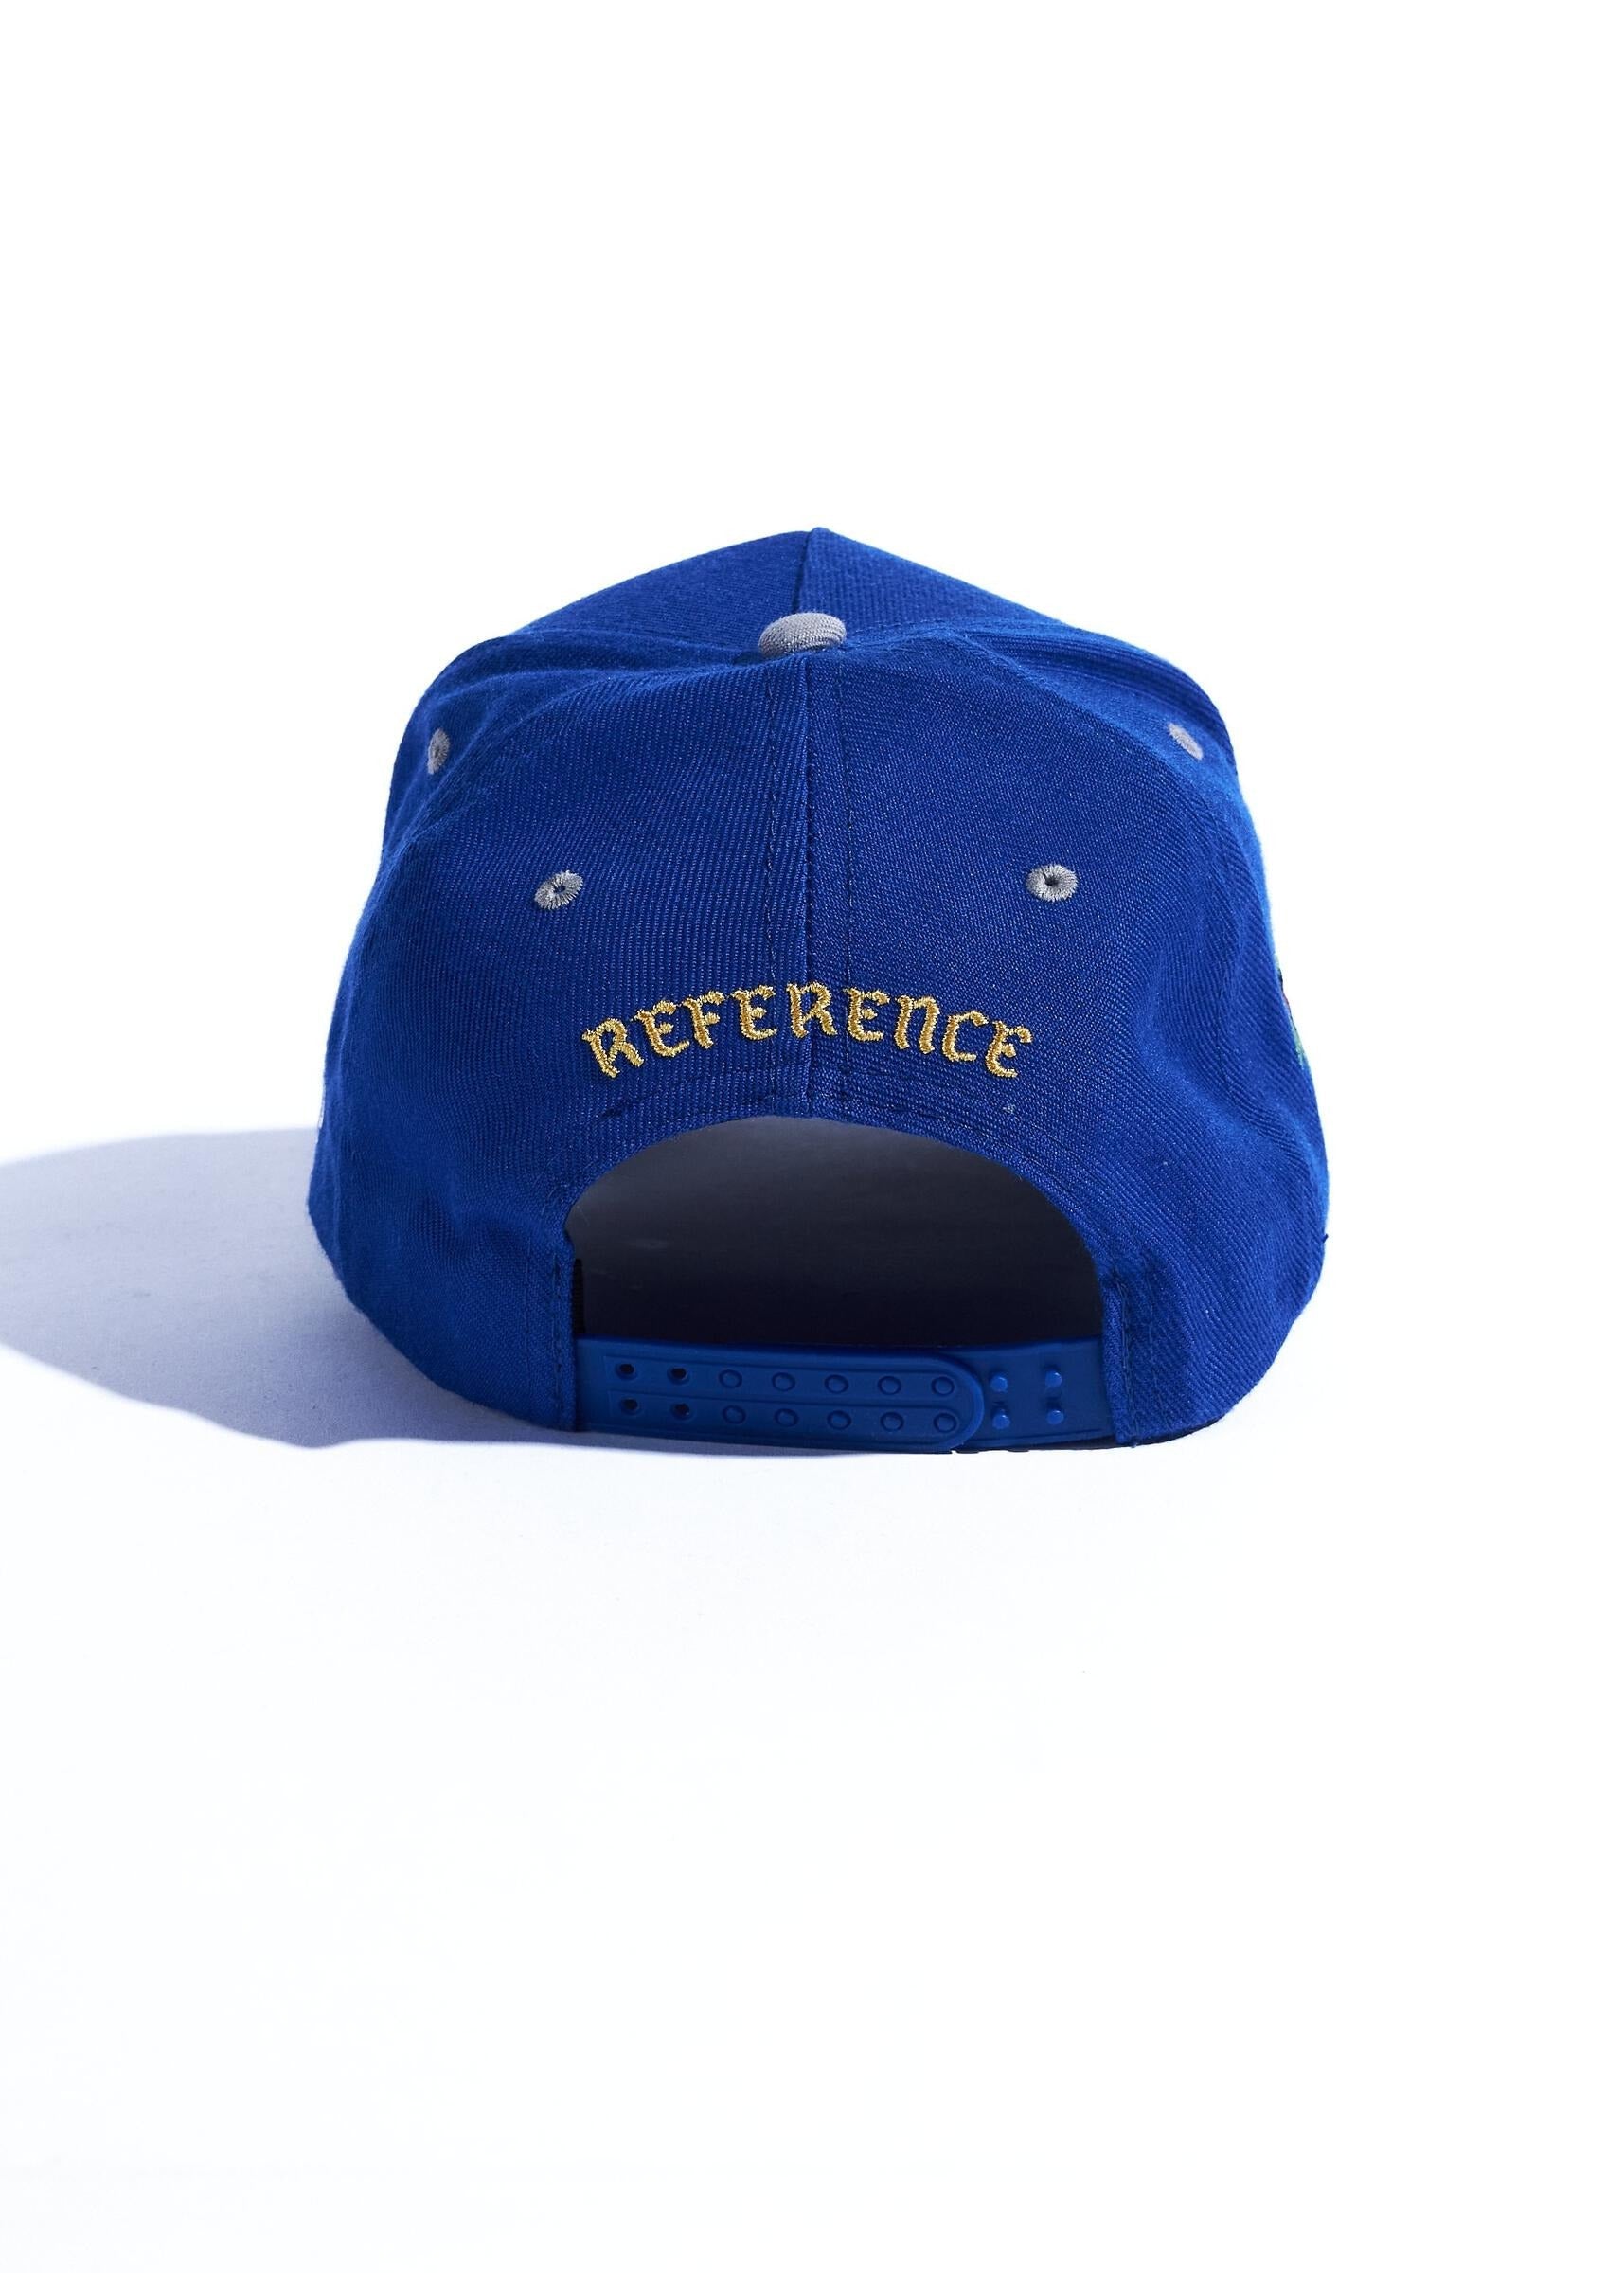 Reference Snapback Hat - Paradise